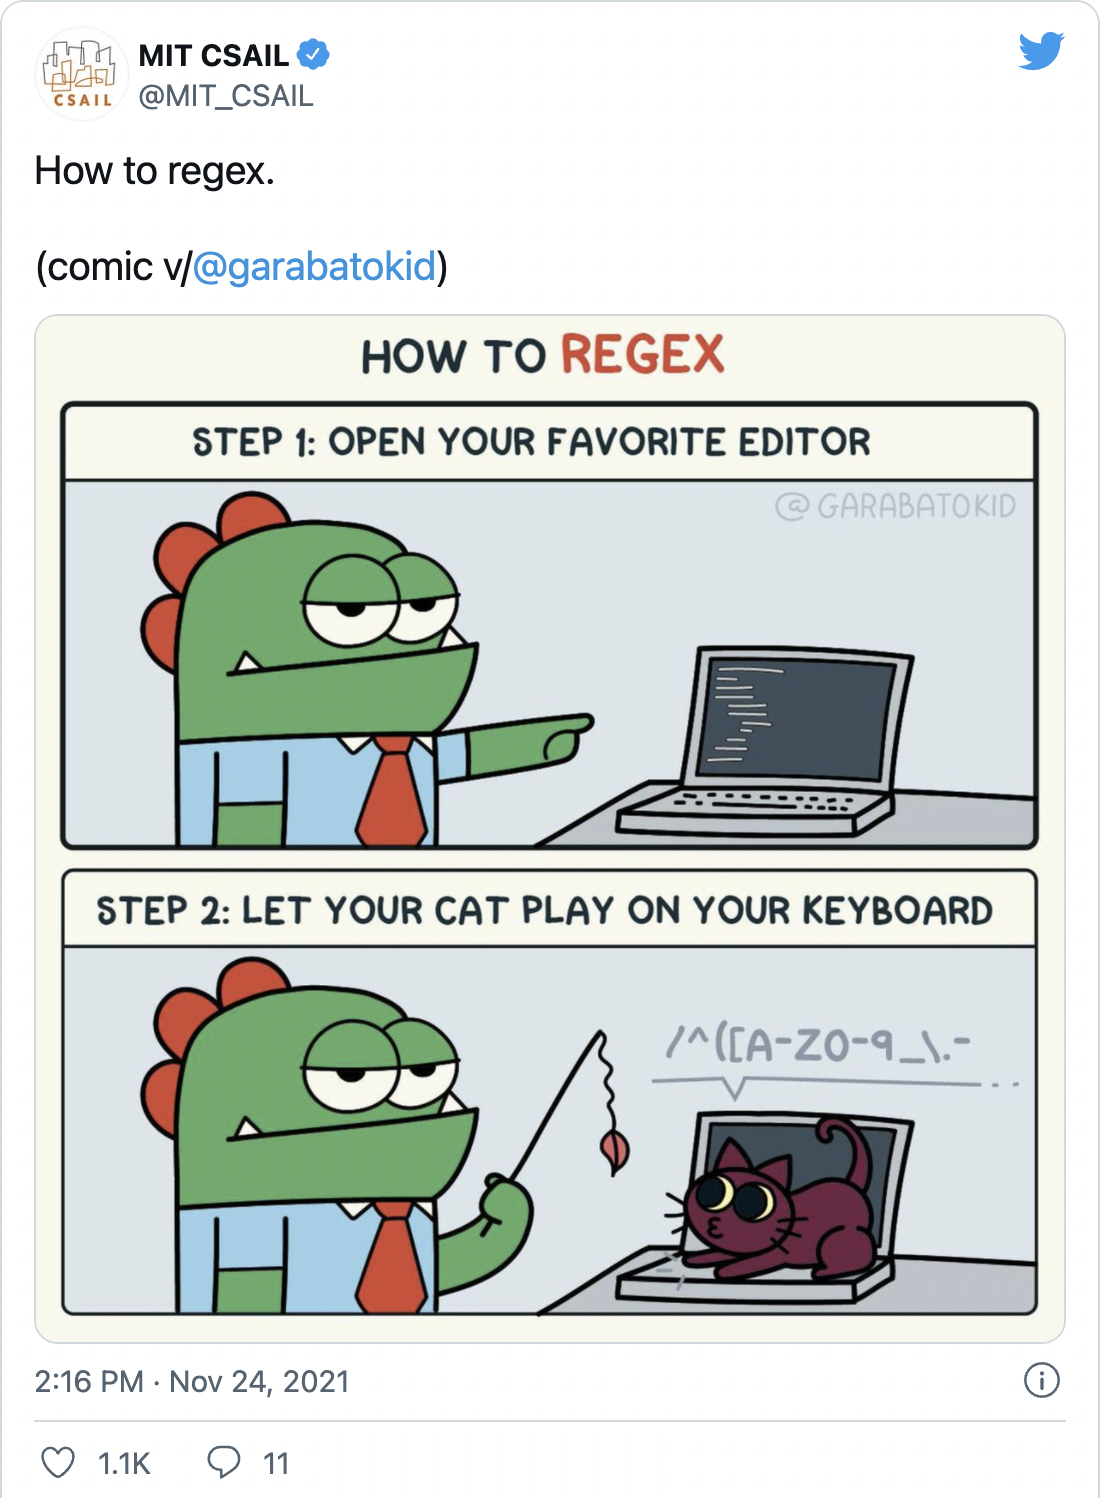 MIT CSAIL (@MIT_CSAIL) on Twitter) &ldquo;How to regex. (comic v/@garabatokid)&rdquo;